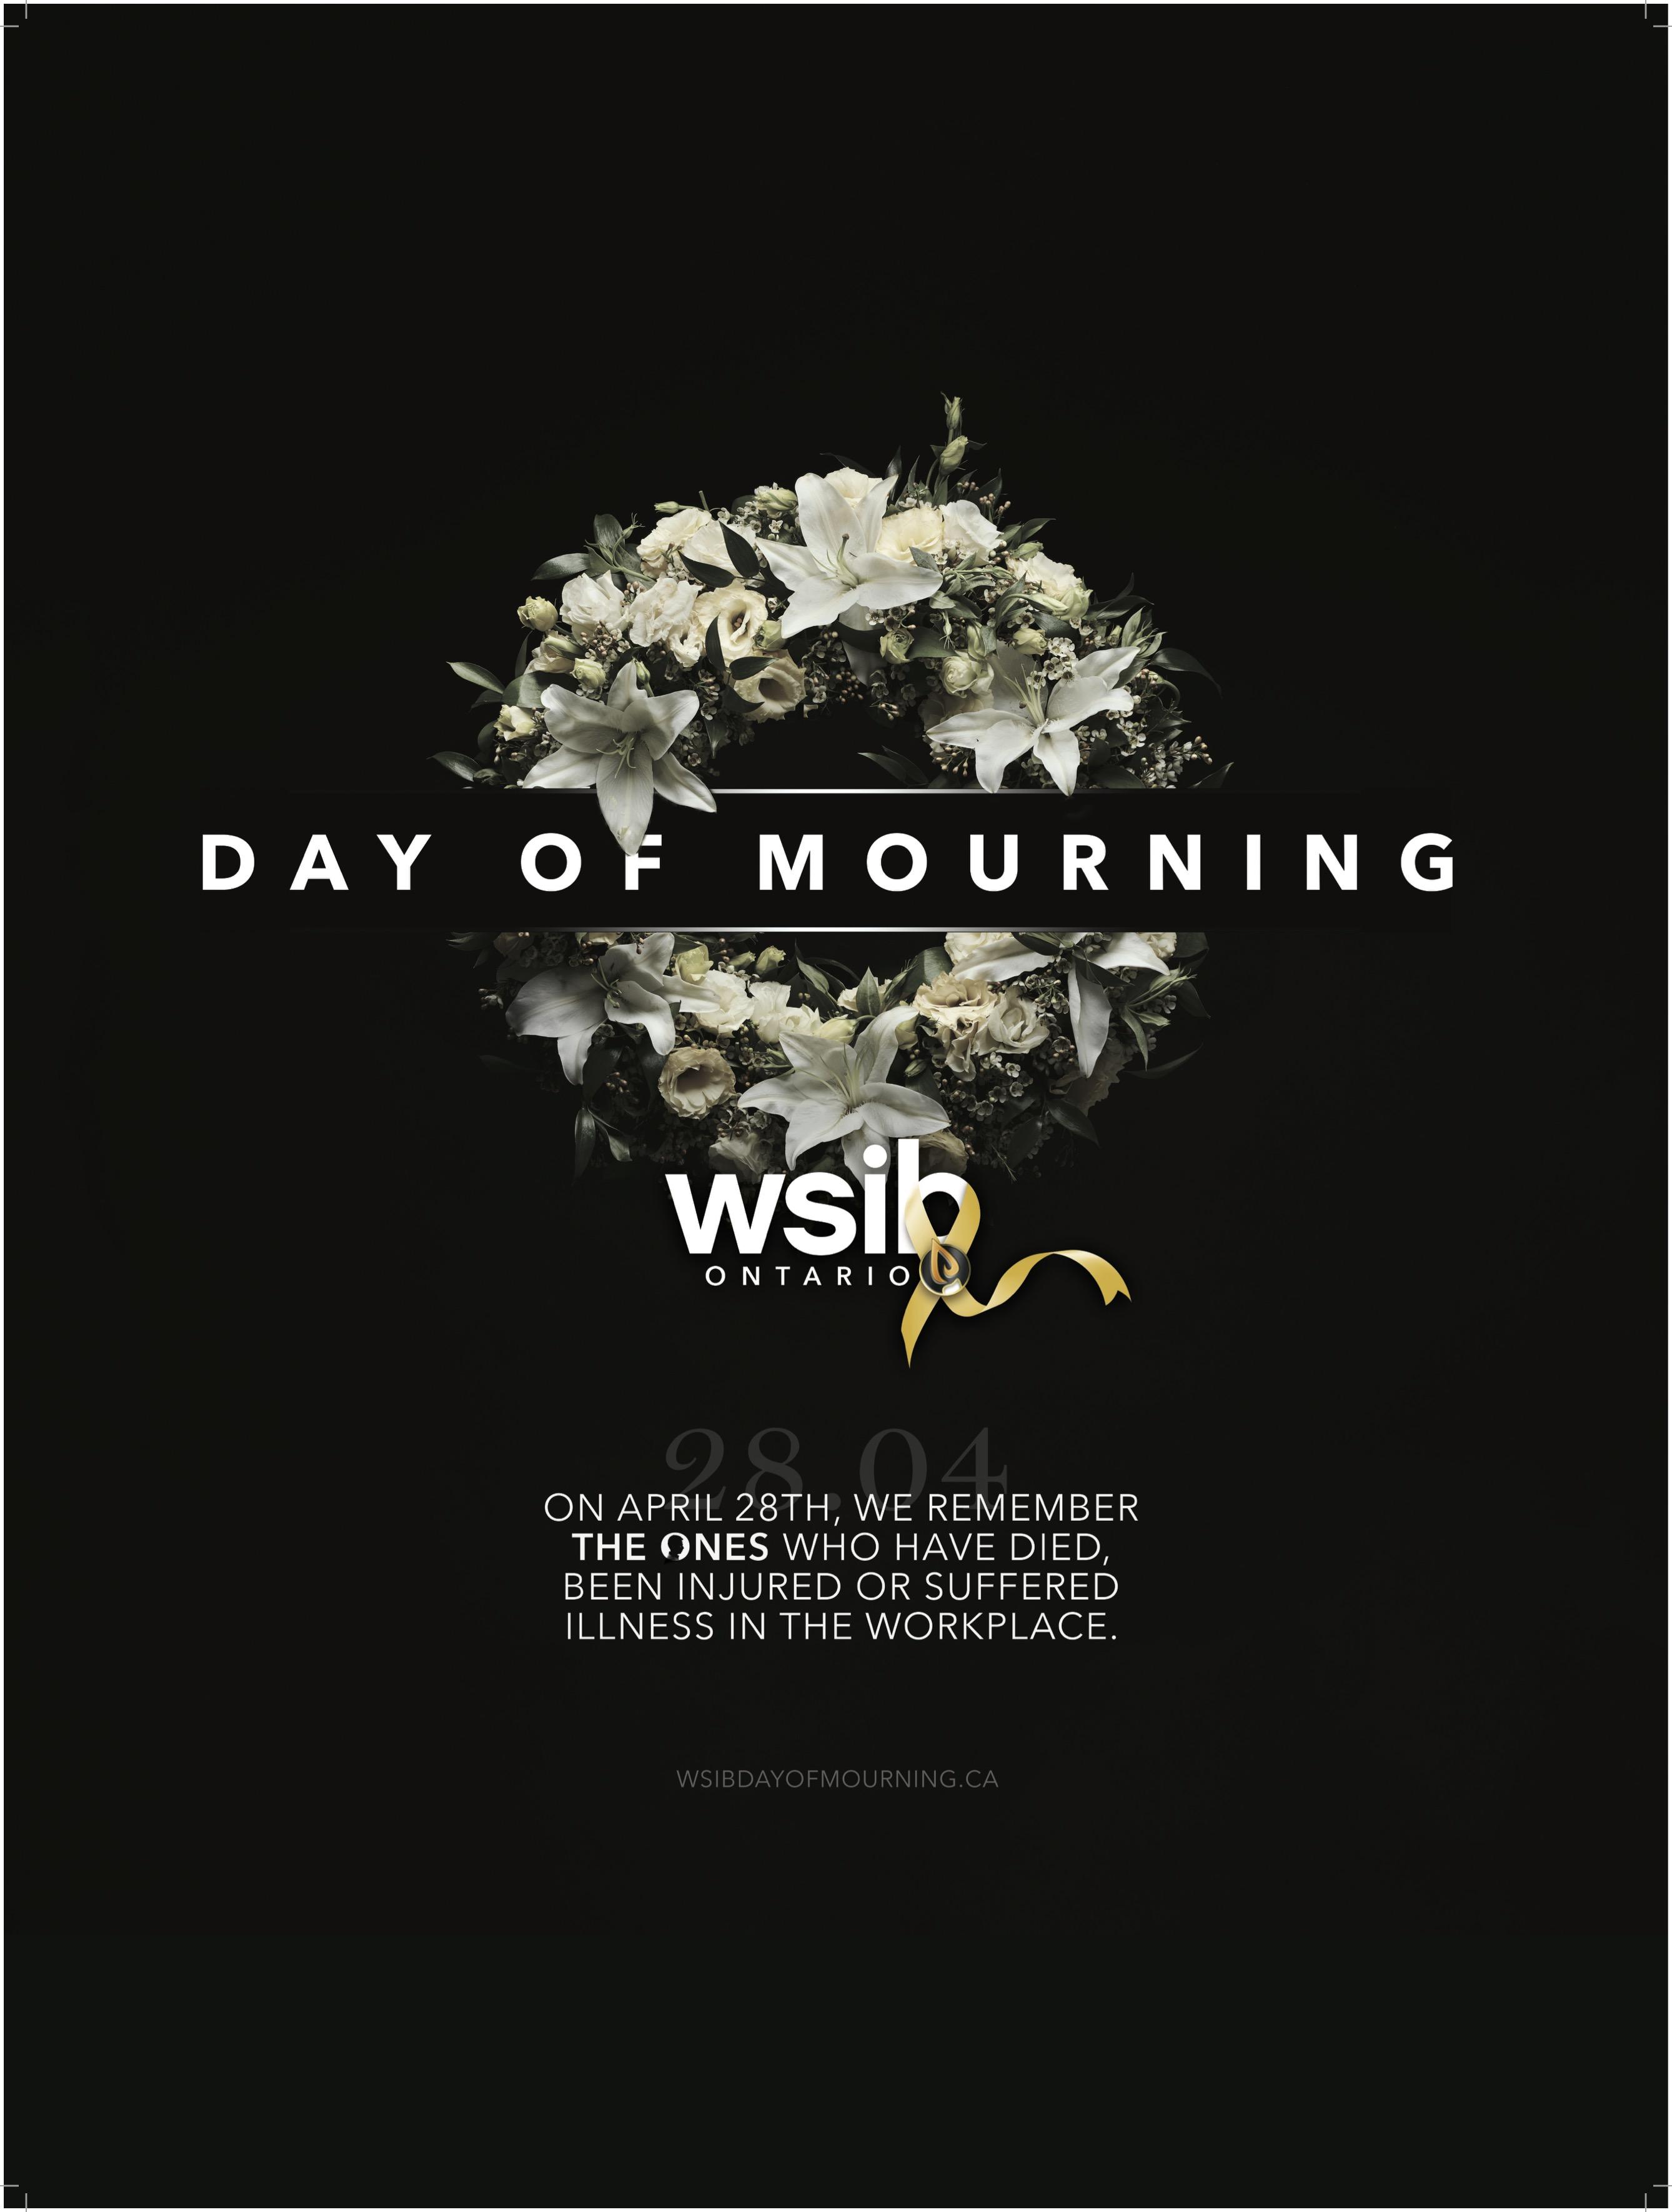 Day of Mourning WSIB Image